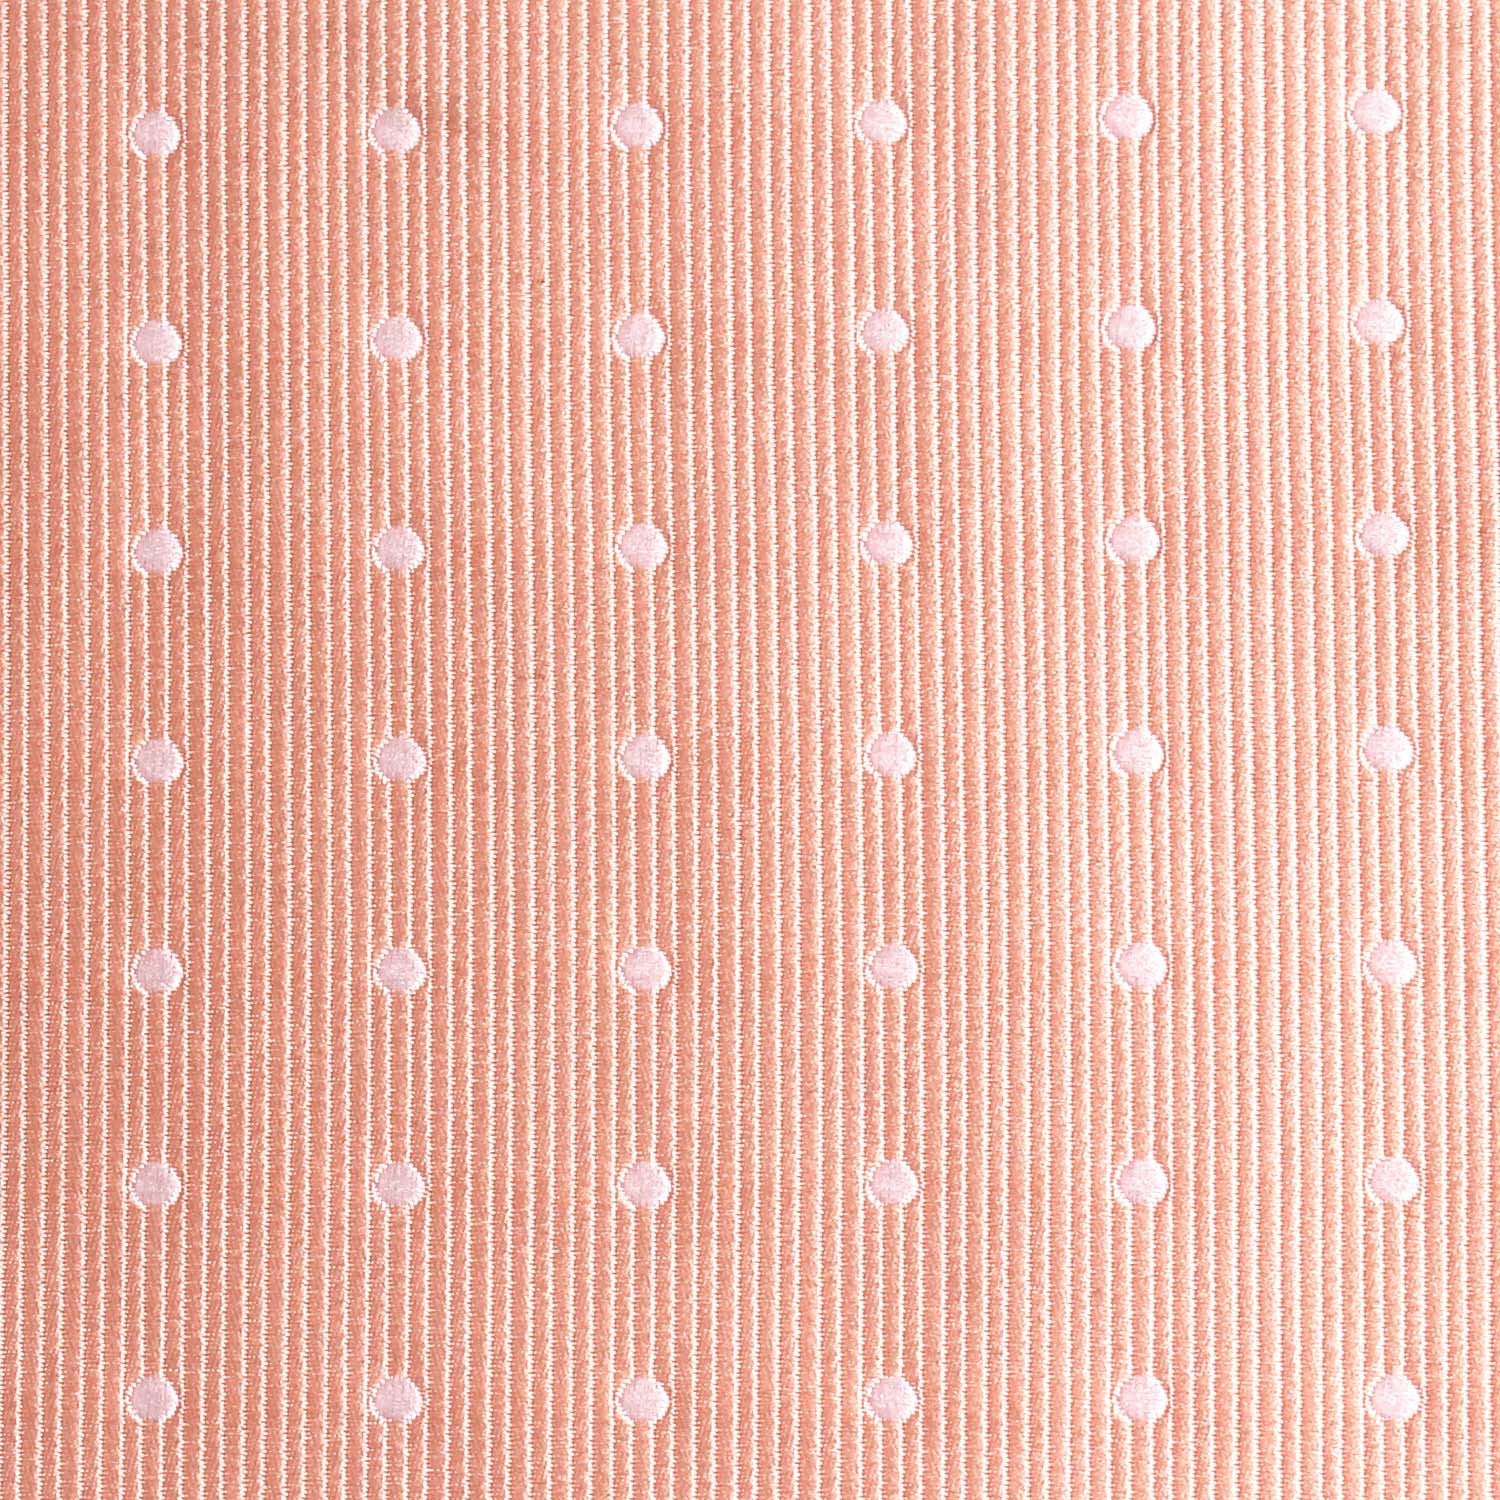 Peach with White Polka Dots Fabric Self Tie Diamond Tip Bow Tie M134